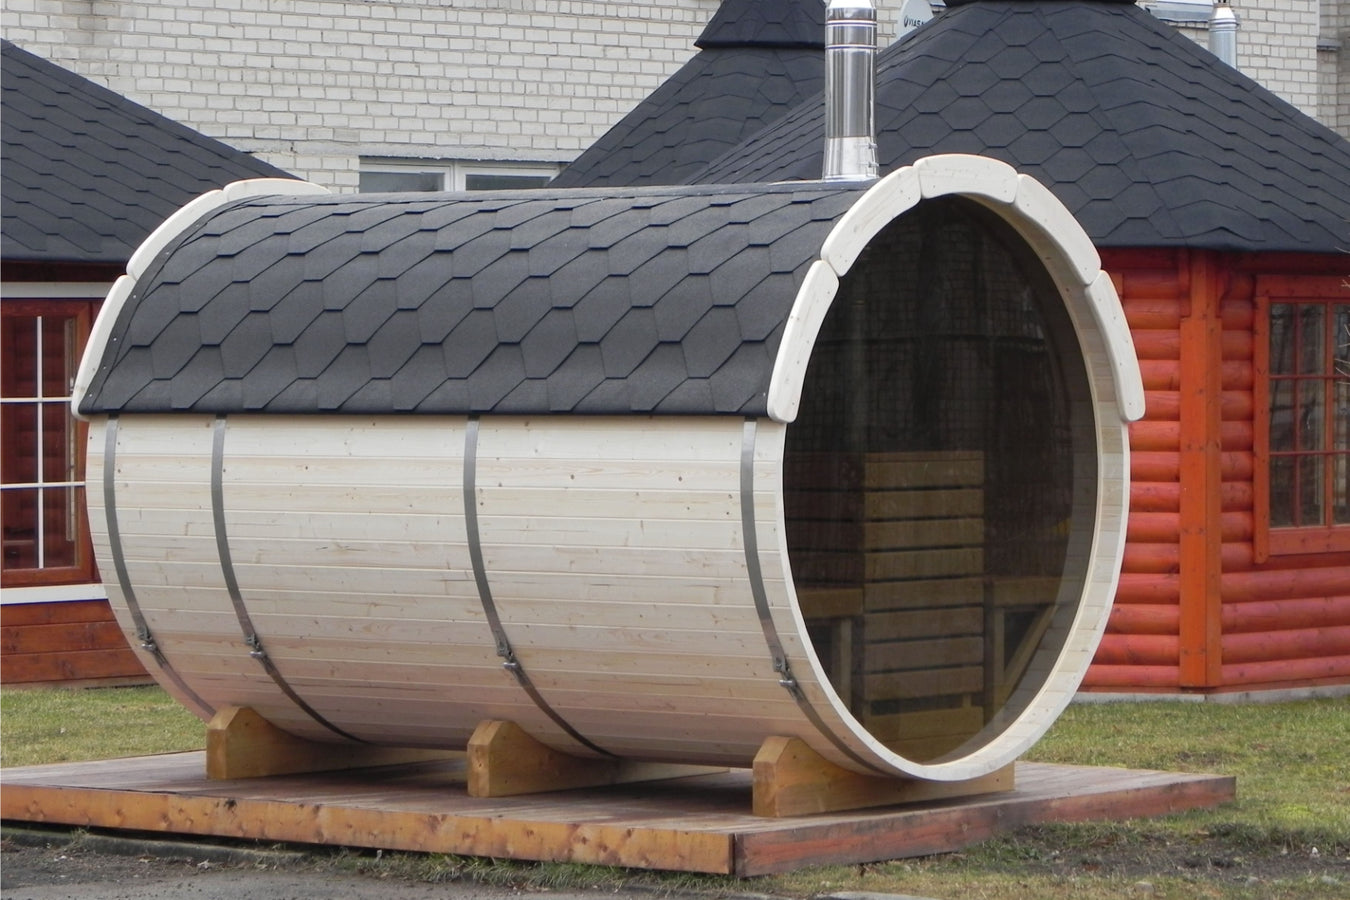 Sauna barrel lifestyle outdoor arrangement on a wooden platform